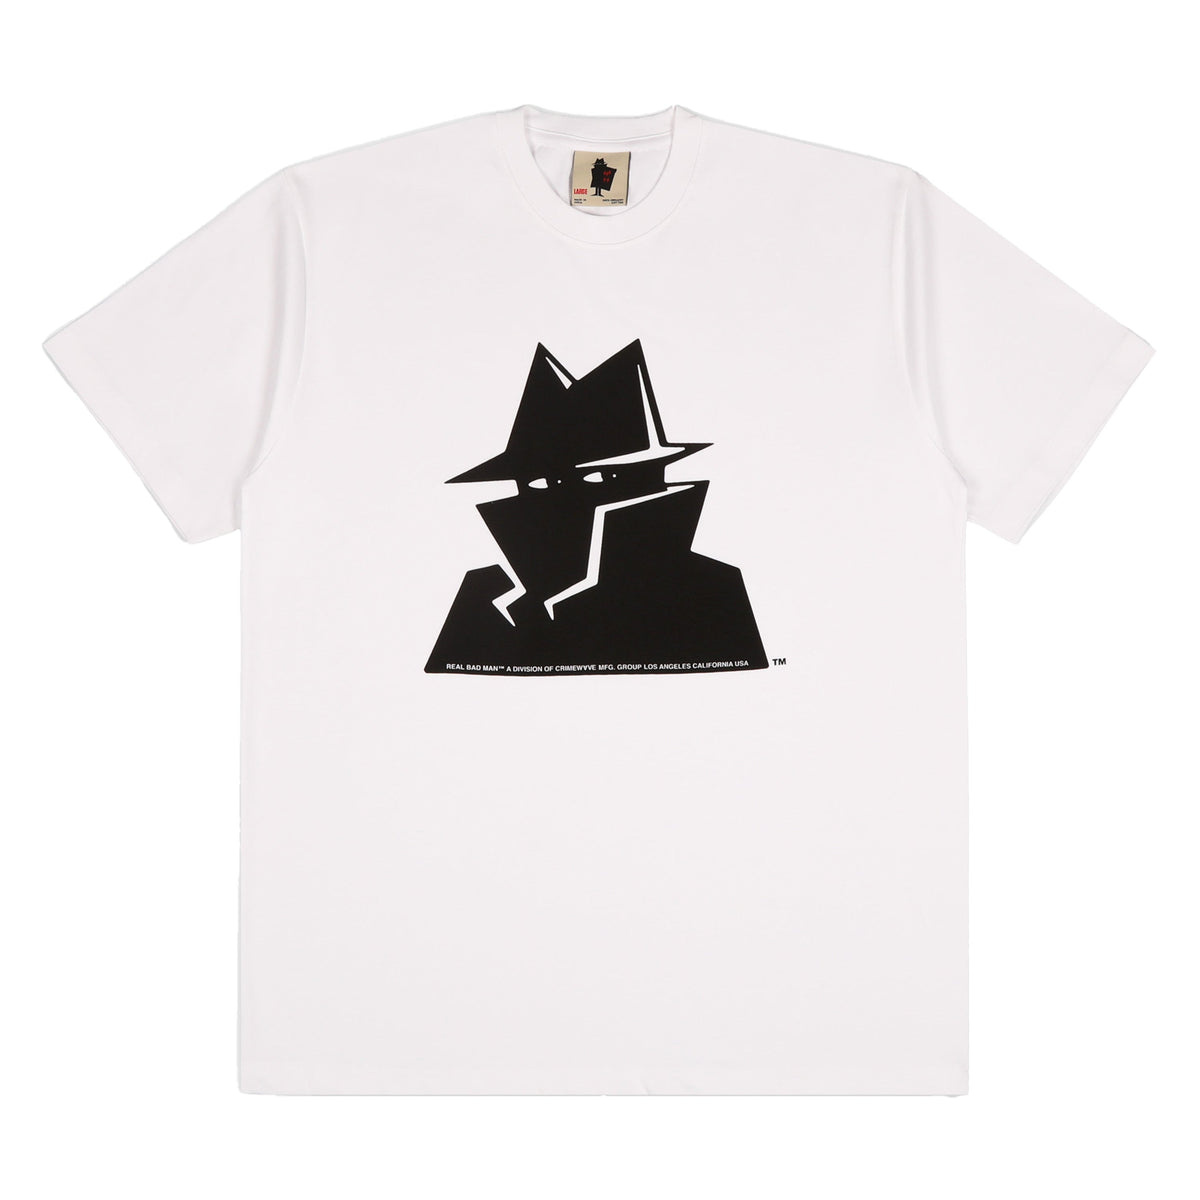 Crimewave TM T-Shirt